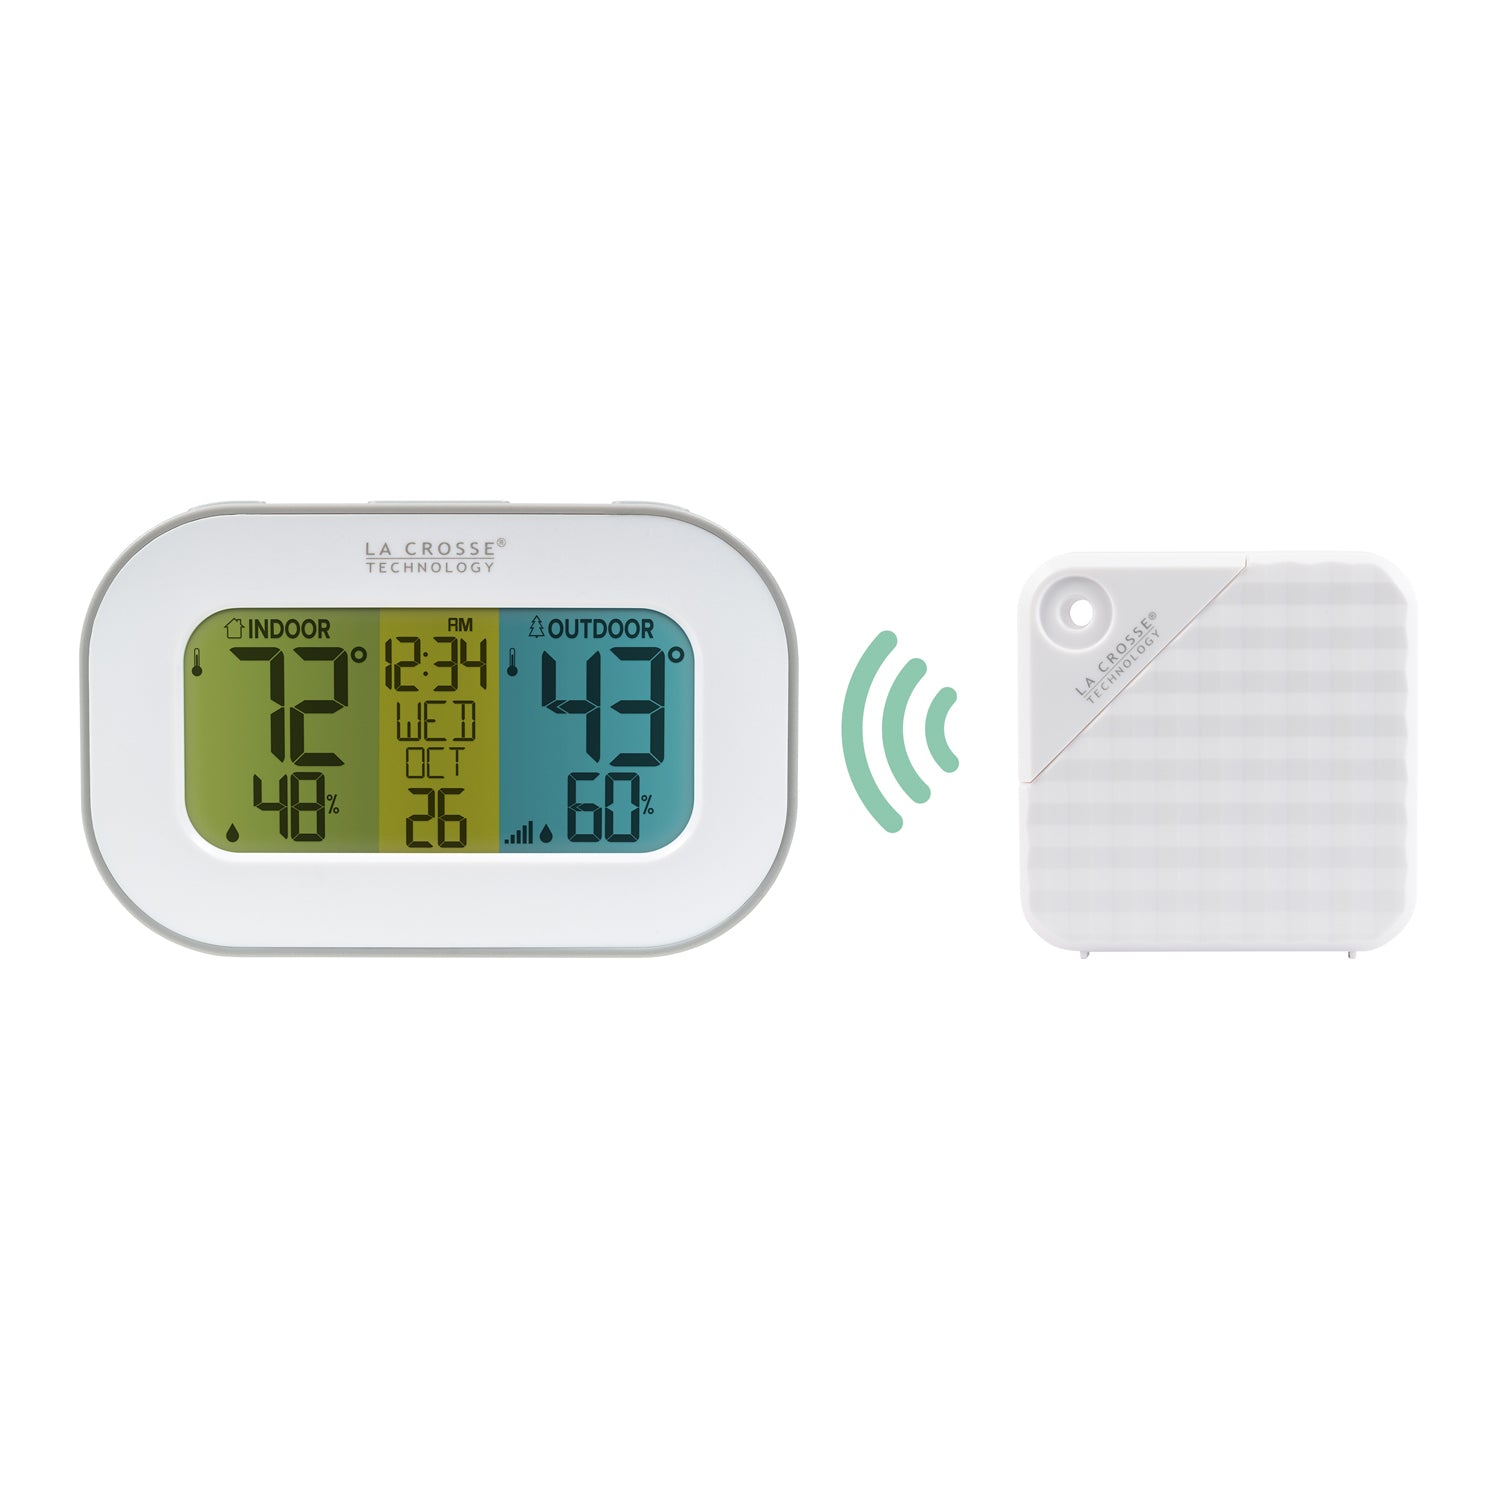 308-1910G La Crosse Technology Wireless Thermometer Weather Station TX191  Green